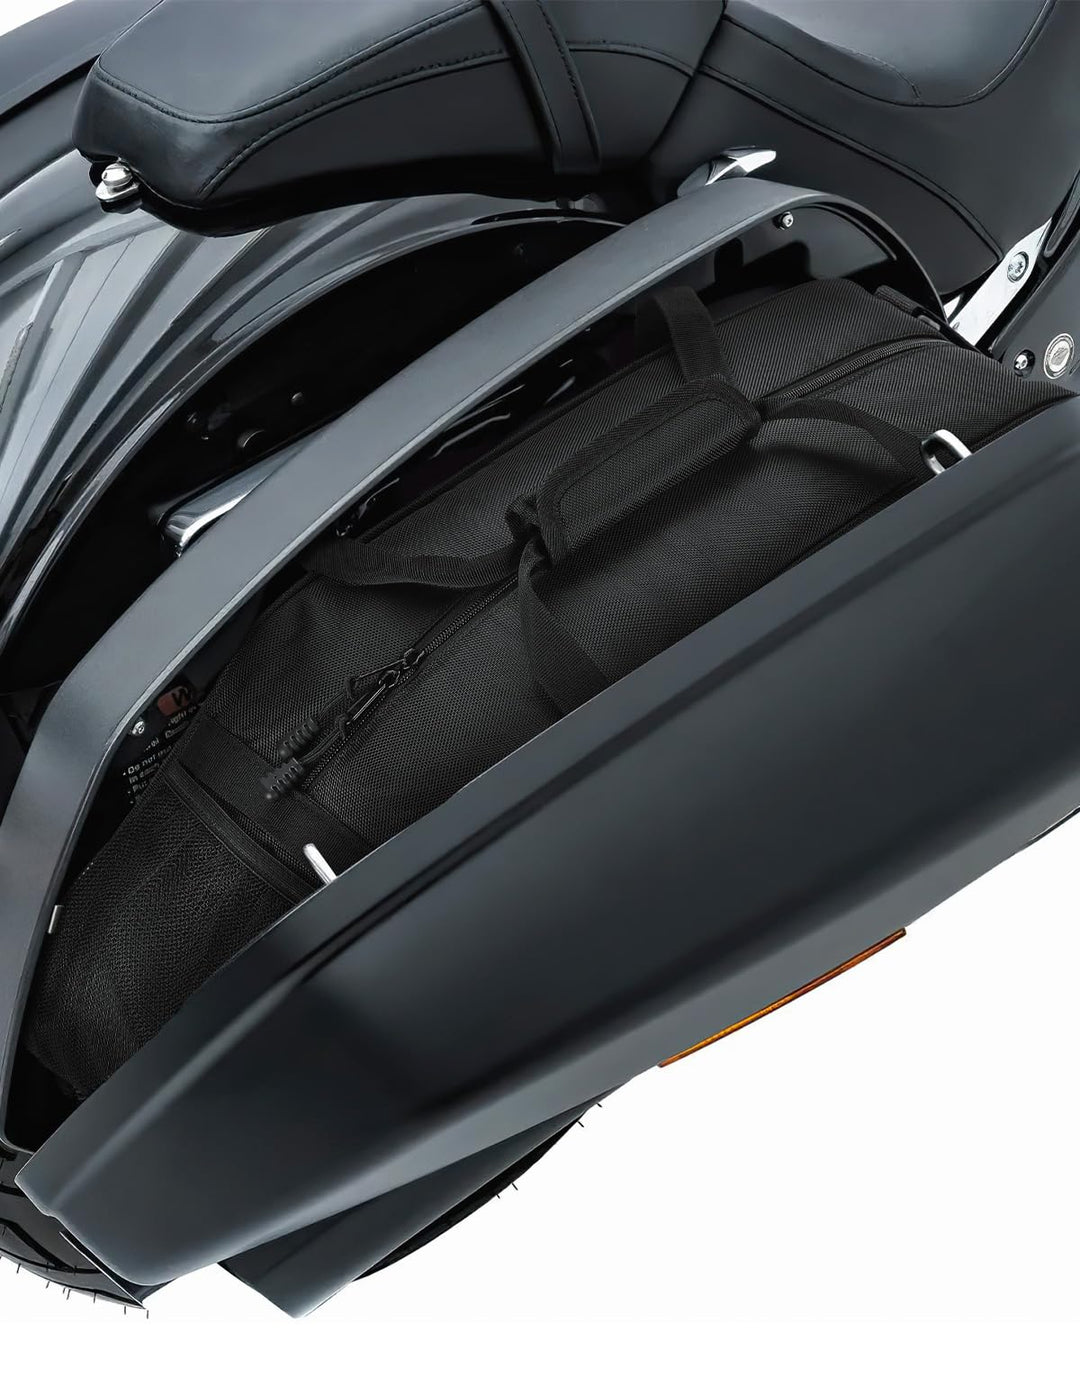 Saddlebag Liners for Low Rider FXLRST Sport Glide FLSB (1 pair) - Kemimoto